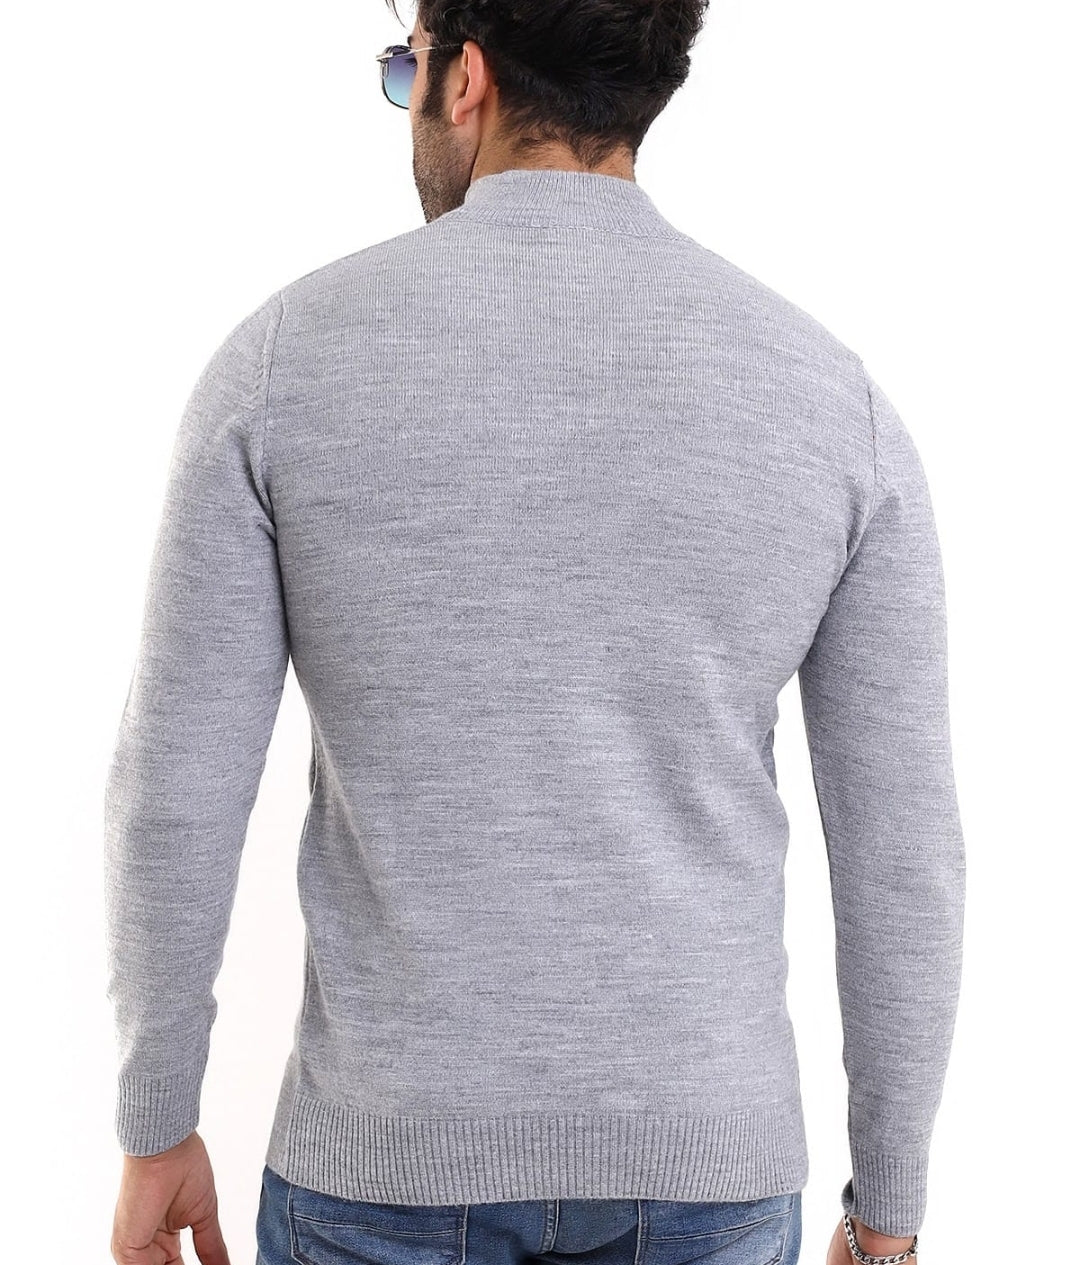 Rico Half-Zip Sweater Grey